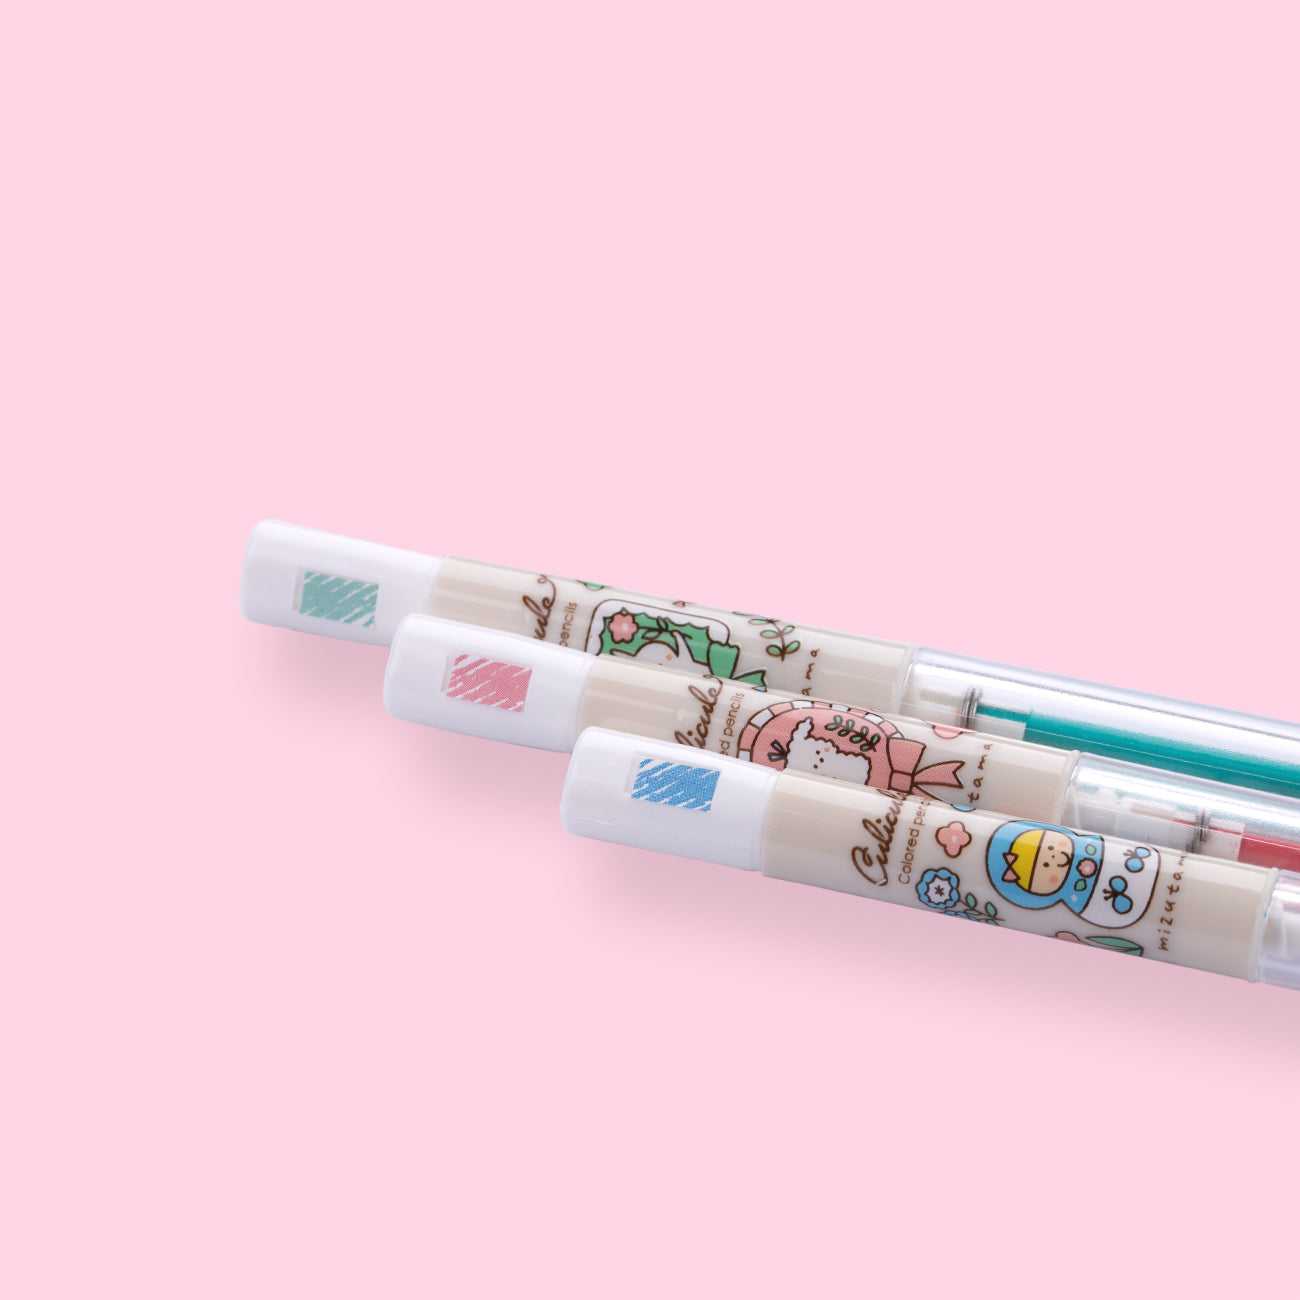 Kutsuwa Culicule x Mizutama Colored Pencils Limited Edition - Plant Flower - 3 Color Set